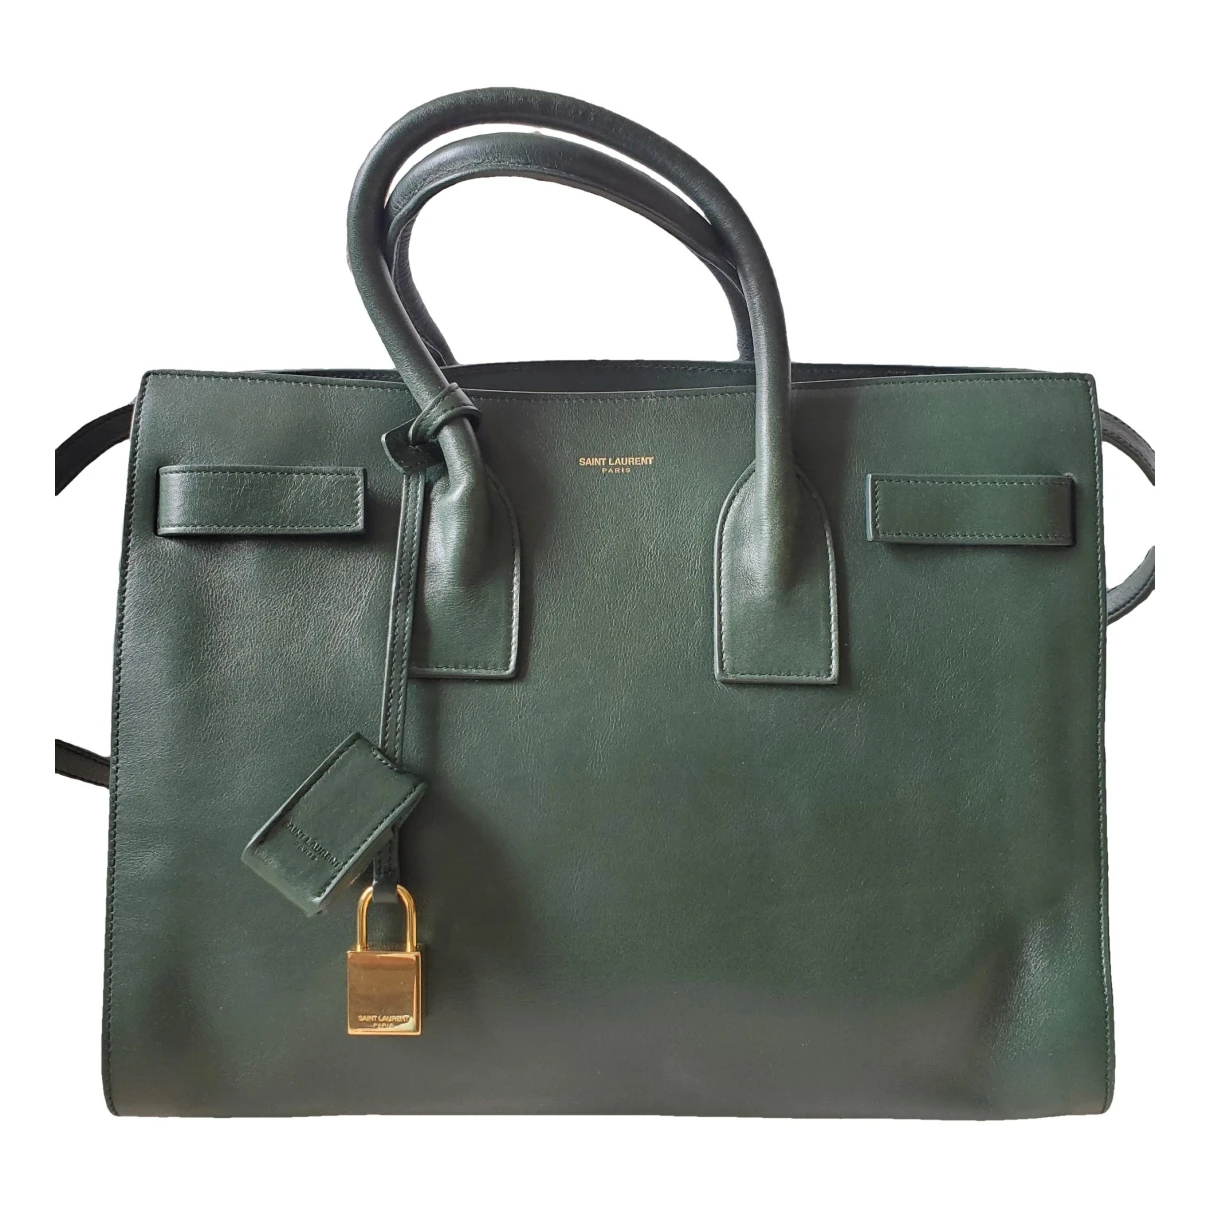 Pre-owned Saint Laurent Sac De Jour Duffle 48h Leather Travel Bag In Green